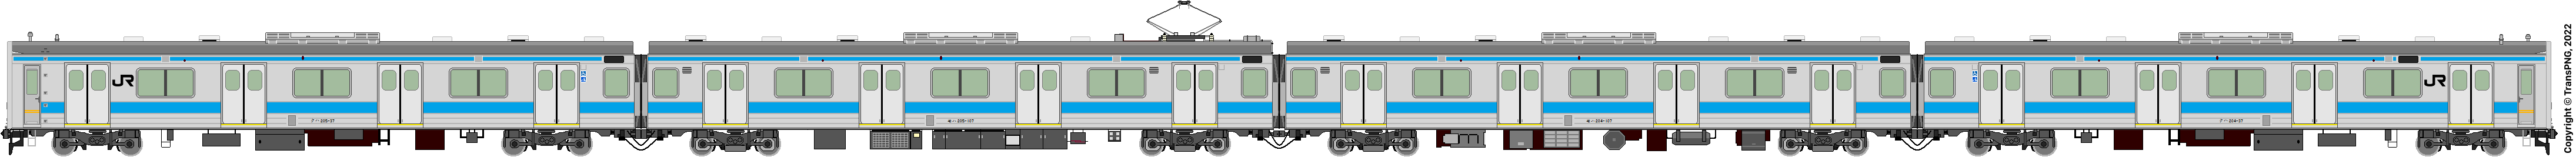 5608 - [5608] West Japan Railway 52284073996_1279ce4961_o